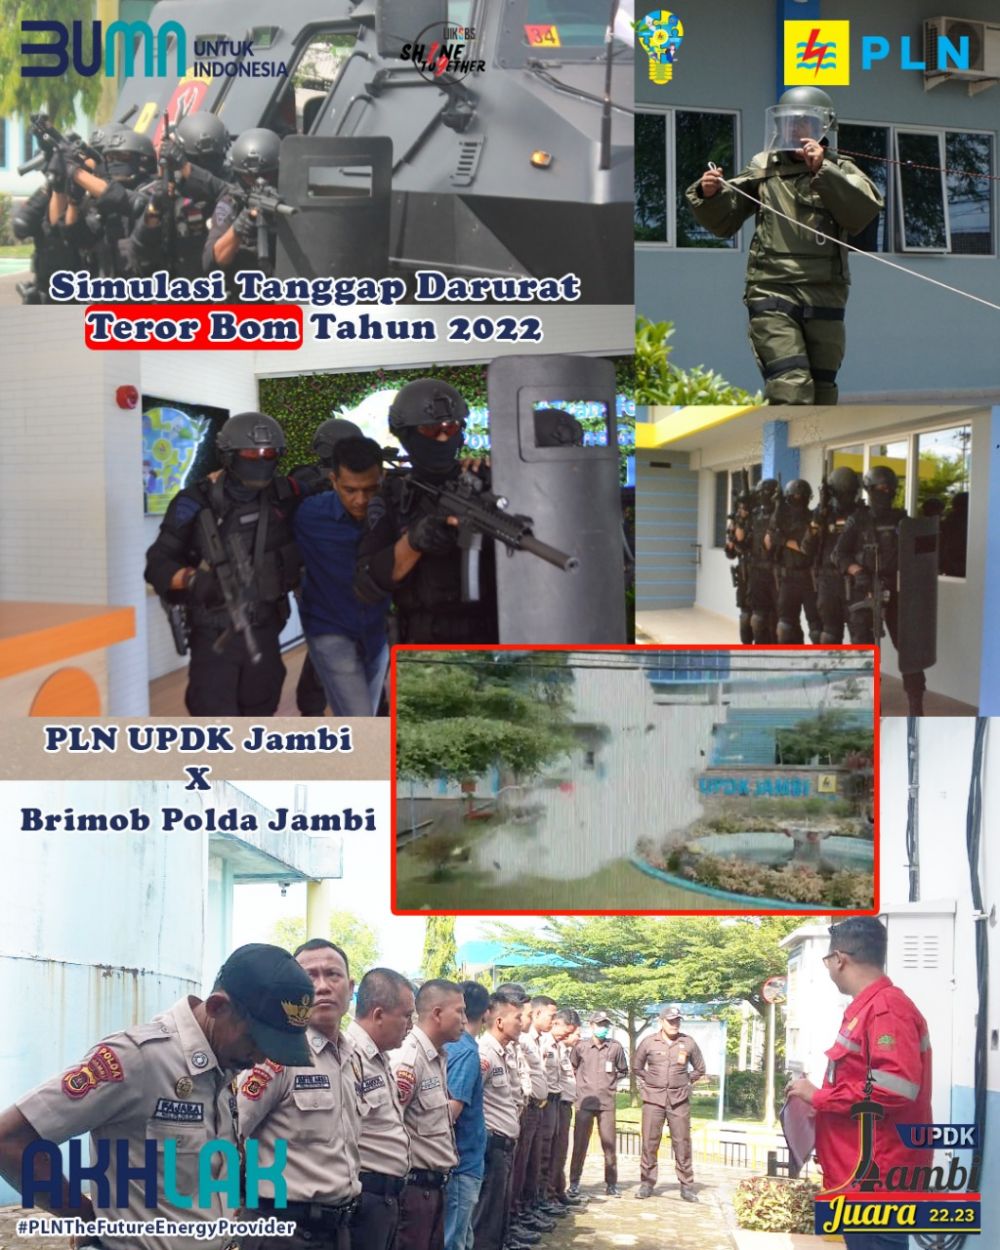 Perkuat Sistem Keamanan, PLN UPDK Jambi dan Brimob Polda Jambi Laksanakan Simulasi Teror Bom